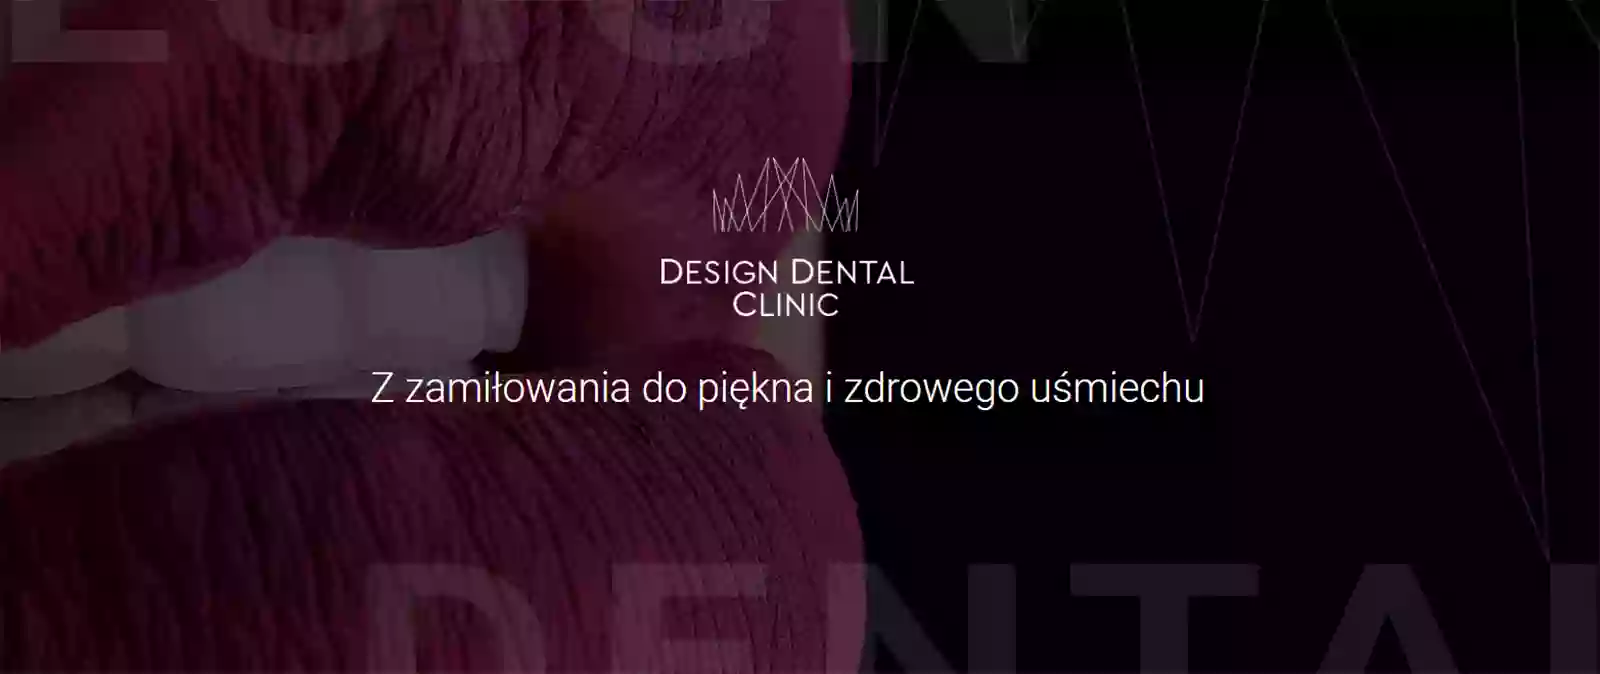 Design Dental Clinic